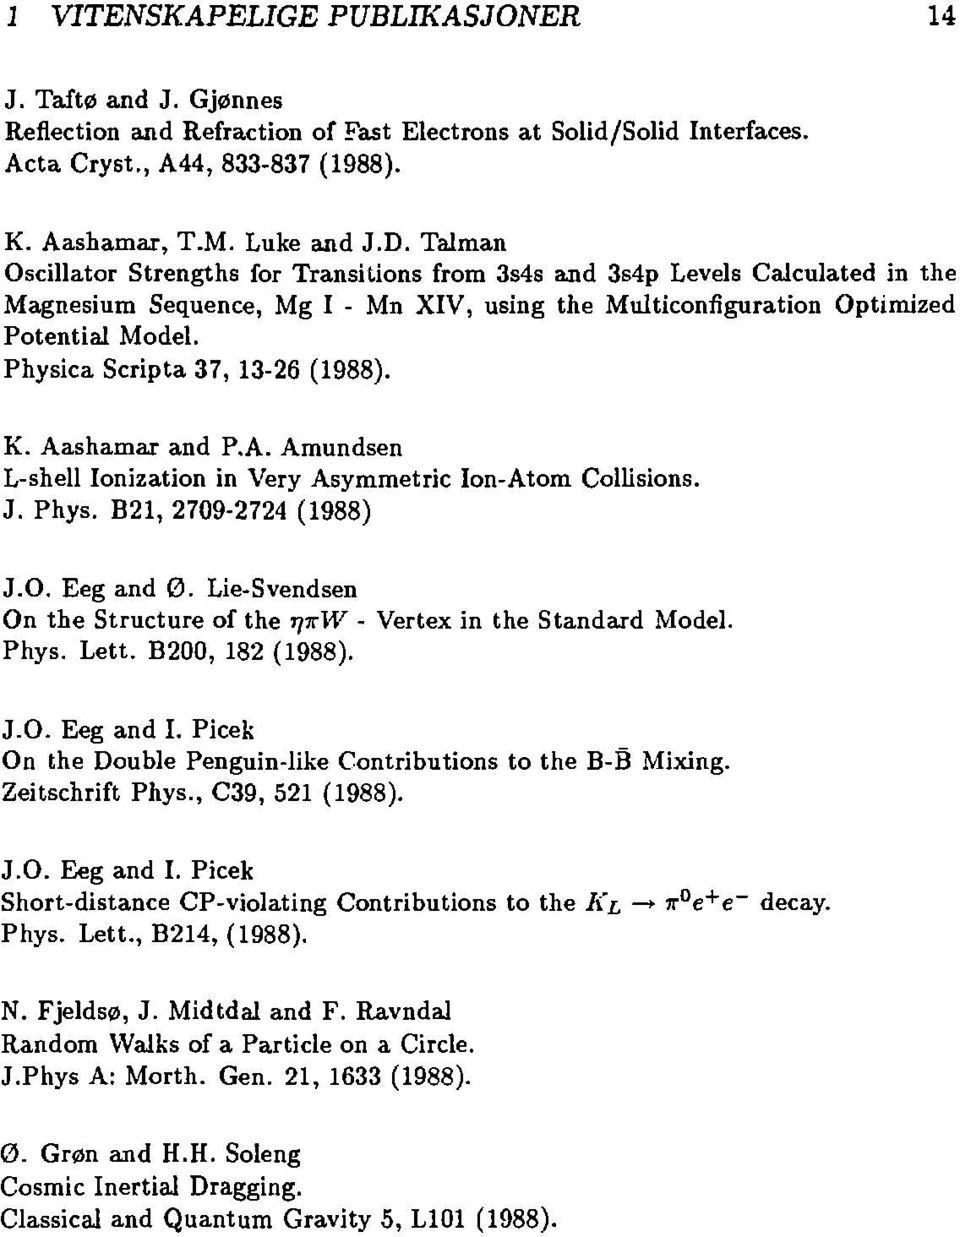 Physica Scripta 37, 13-26 (1988). K. Aashamar and P.A. Amundsen L-shell Ionization in Very Asymmetric Ion-Atom Collisions. J. Phys. B21, 2709-2724 (1988) J.O. Eeg and 0.